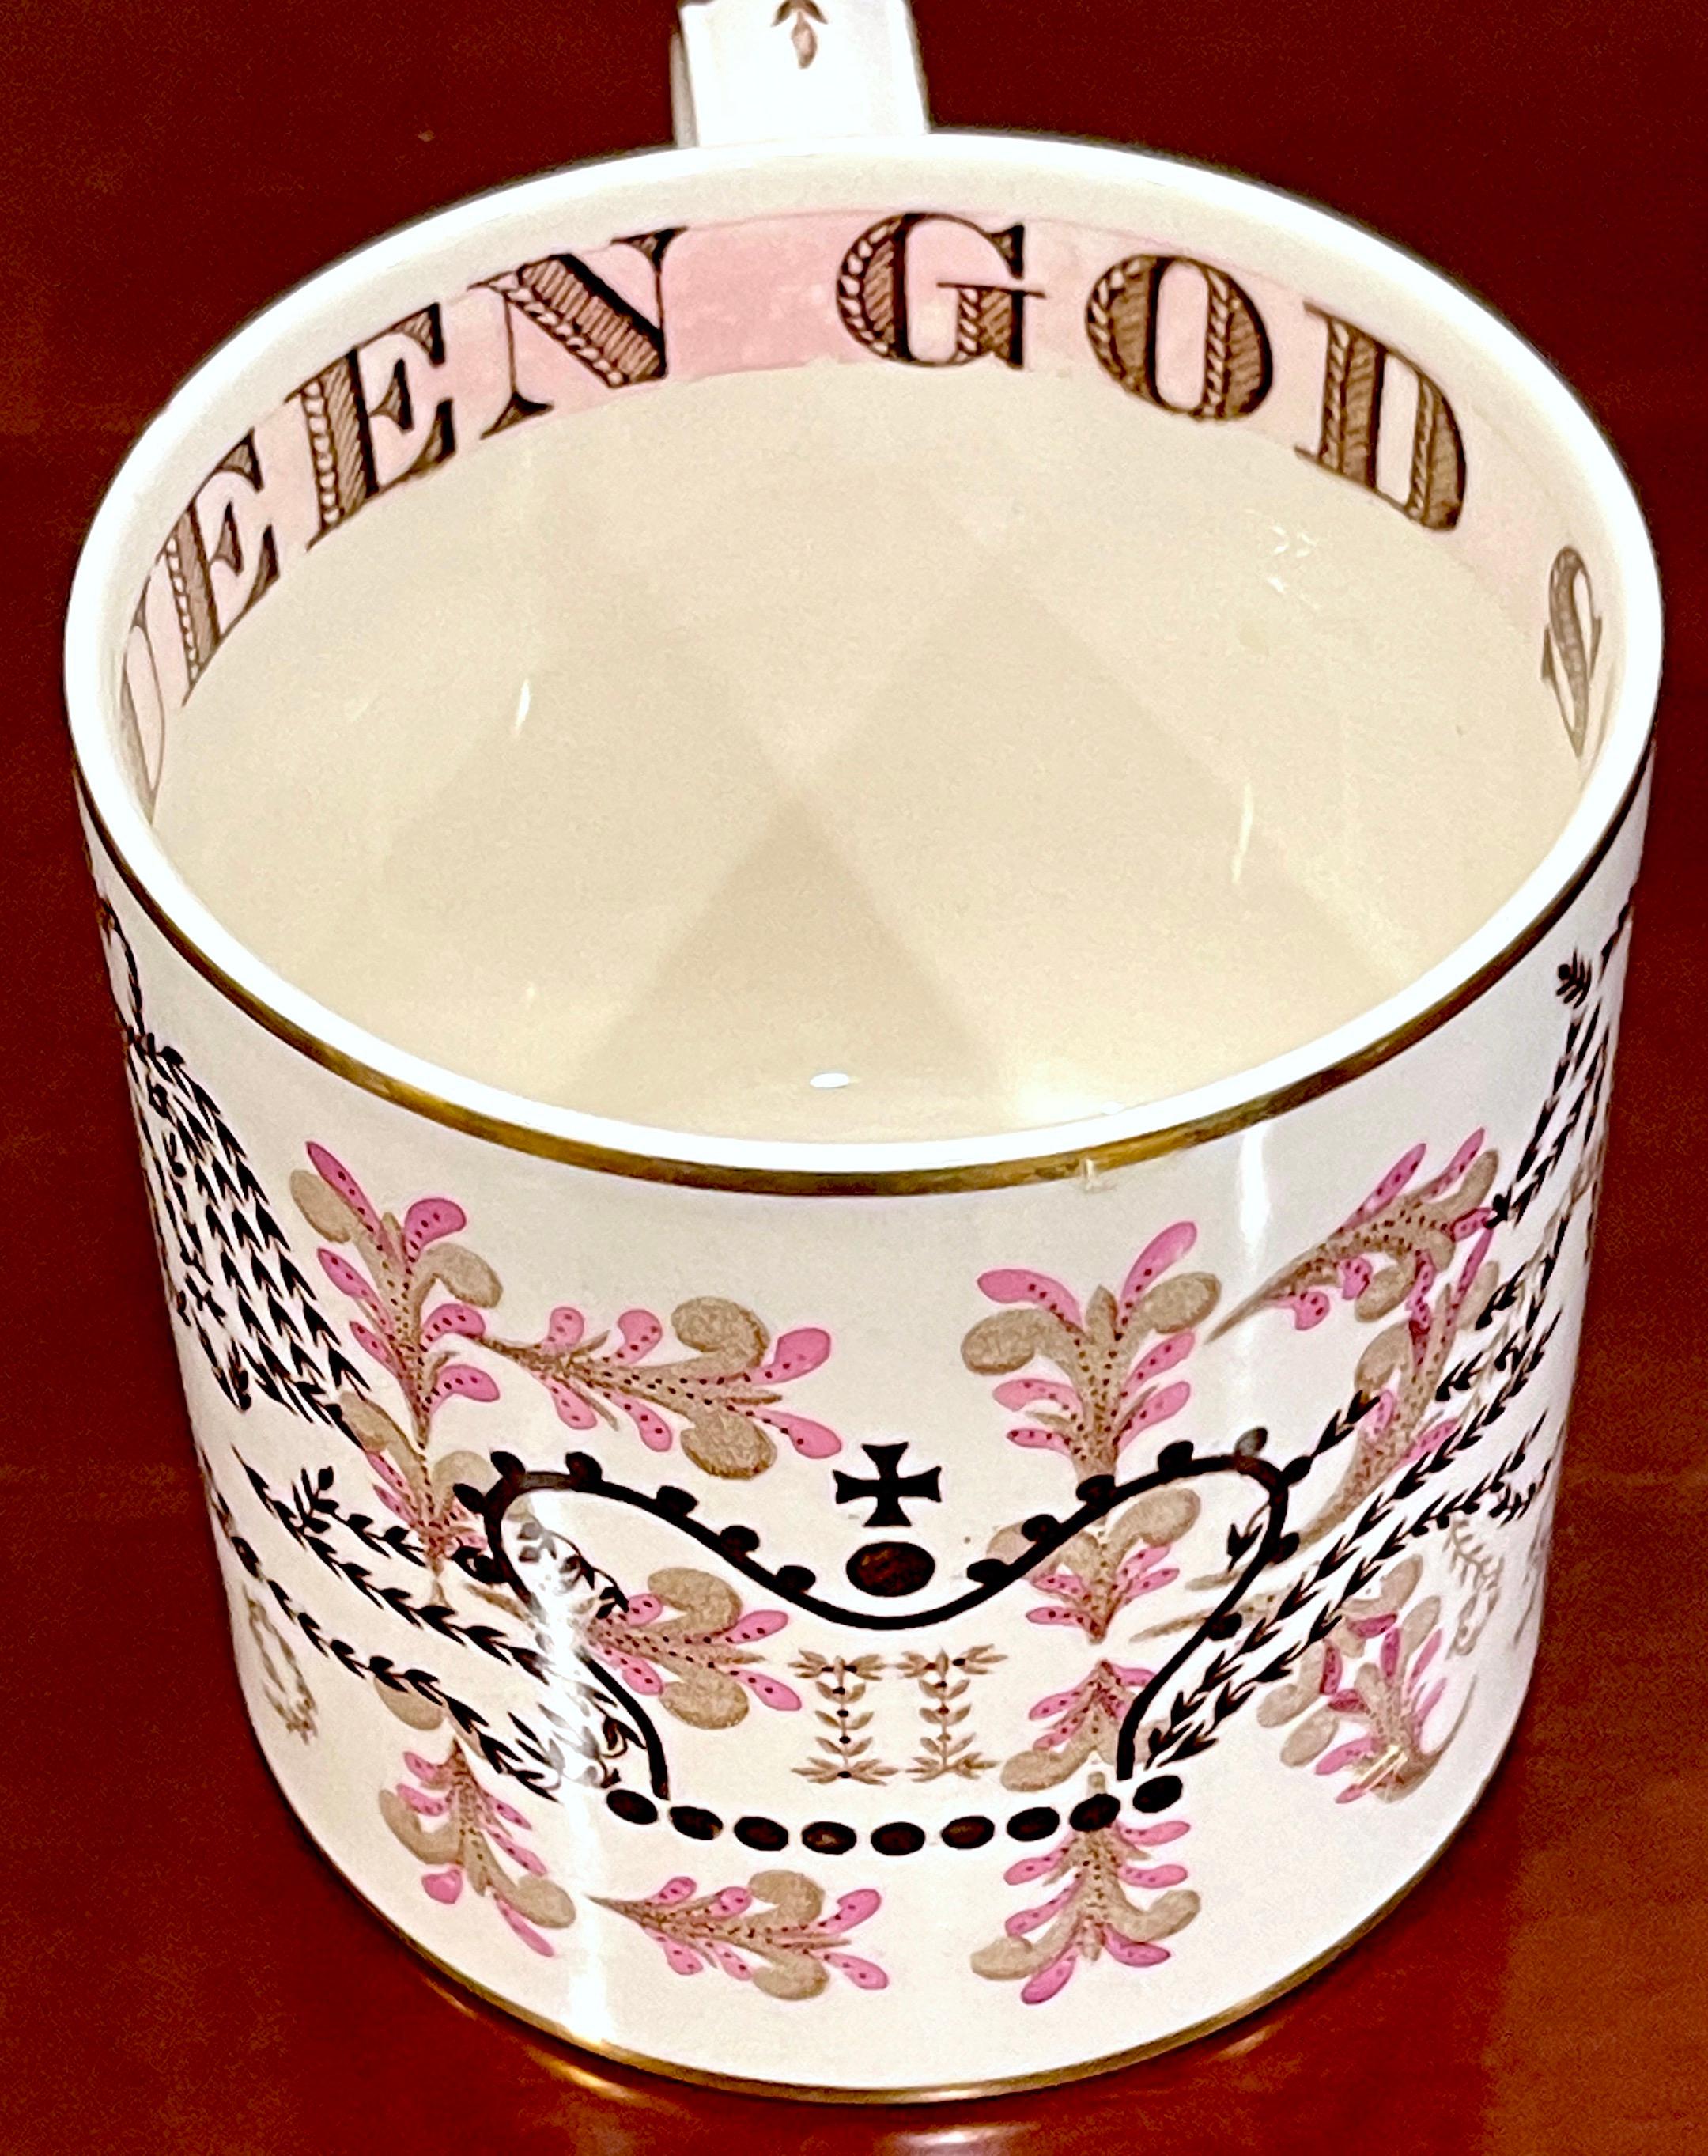 Porcelain A Queen Elizabeth II Commemorative Coronation Mug by Richard Guyatt for Wedgwood For Sale